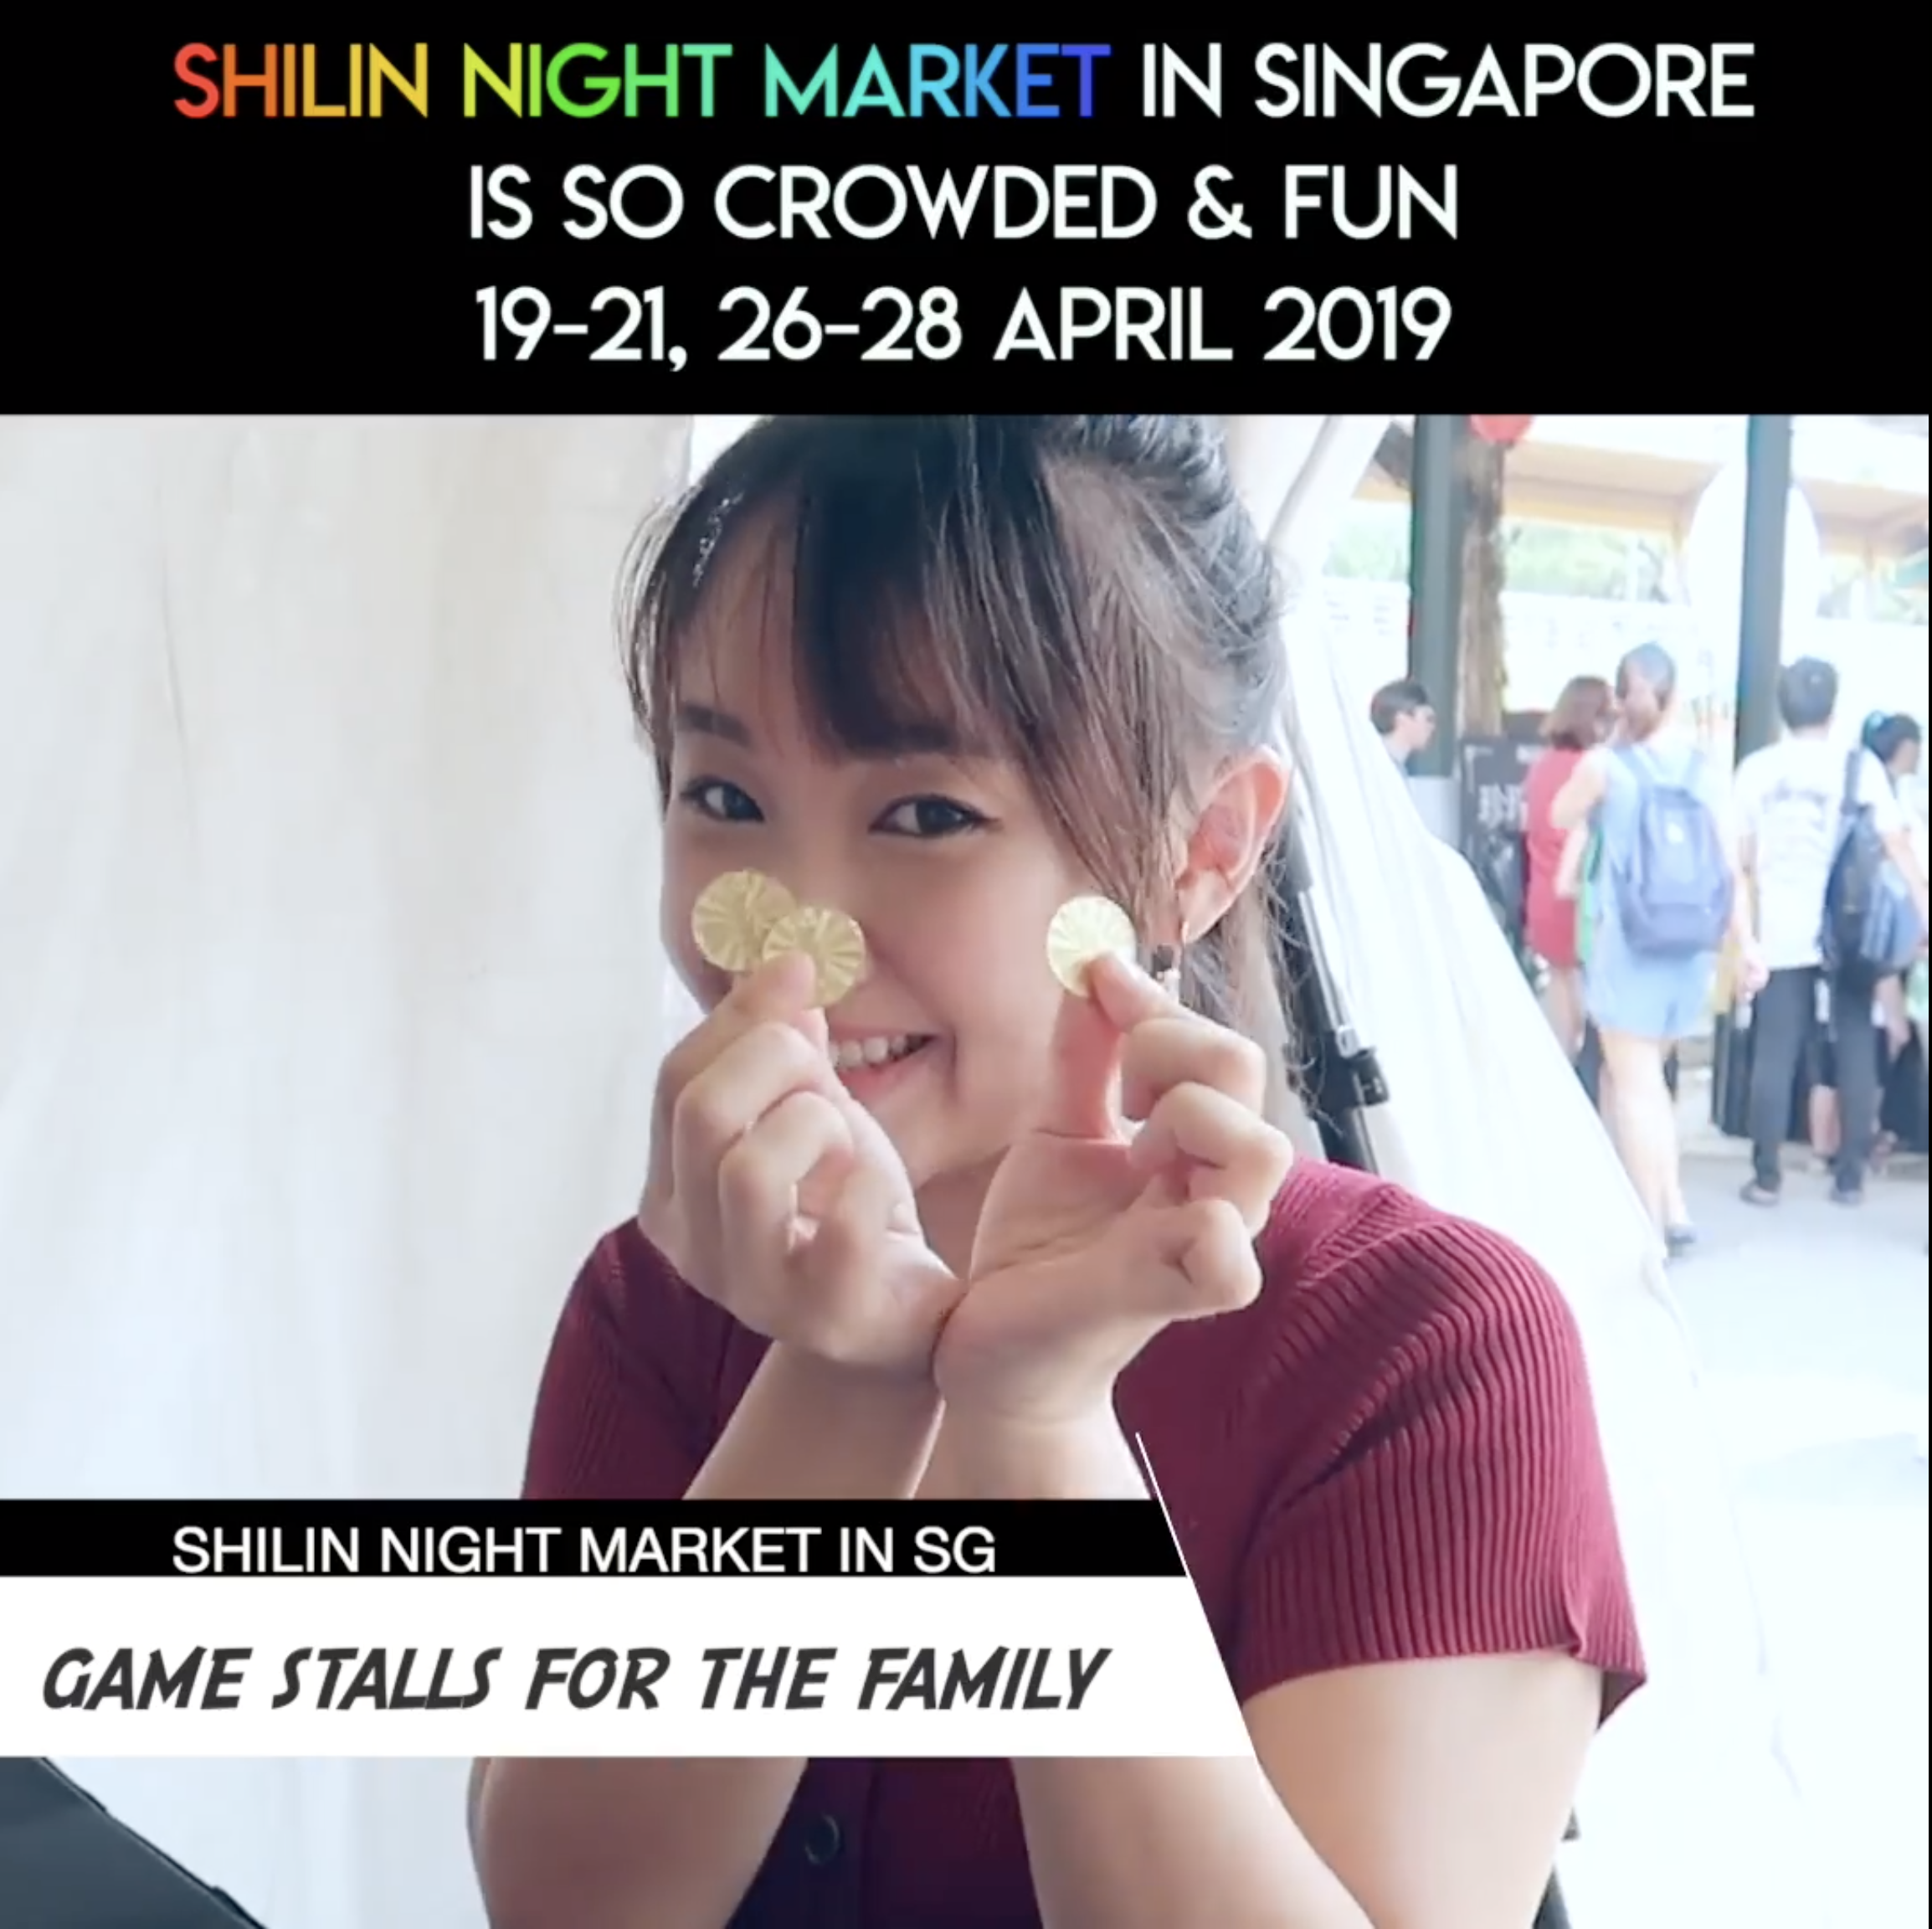 Shilin Night Market in Singapore